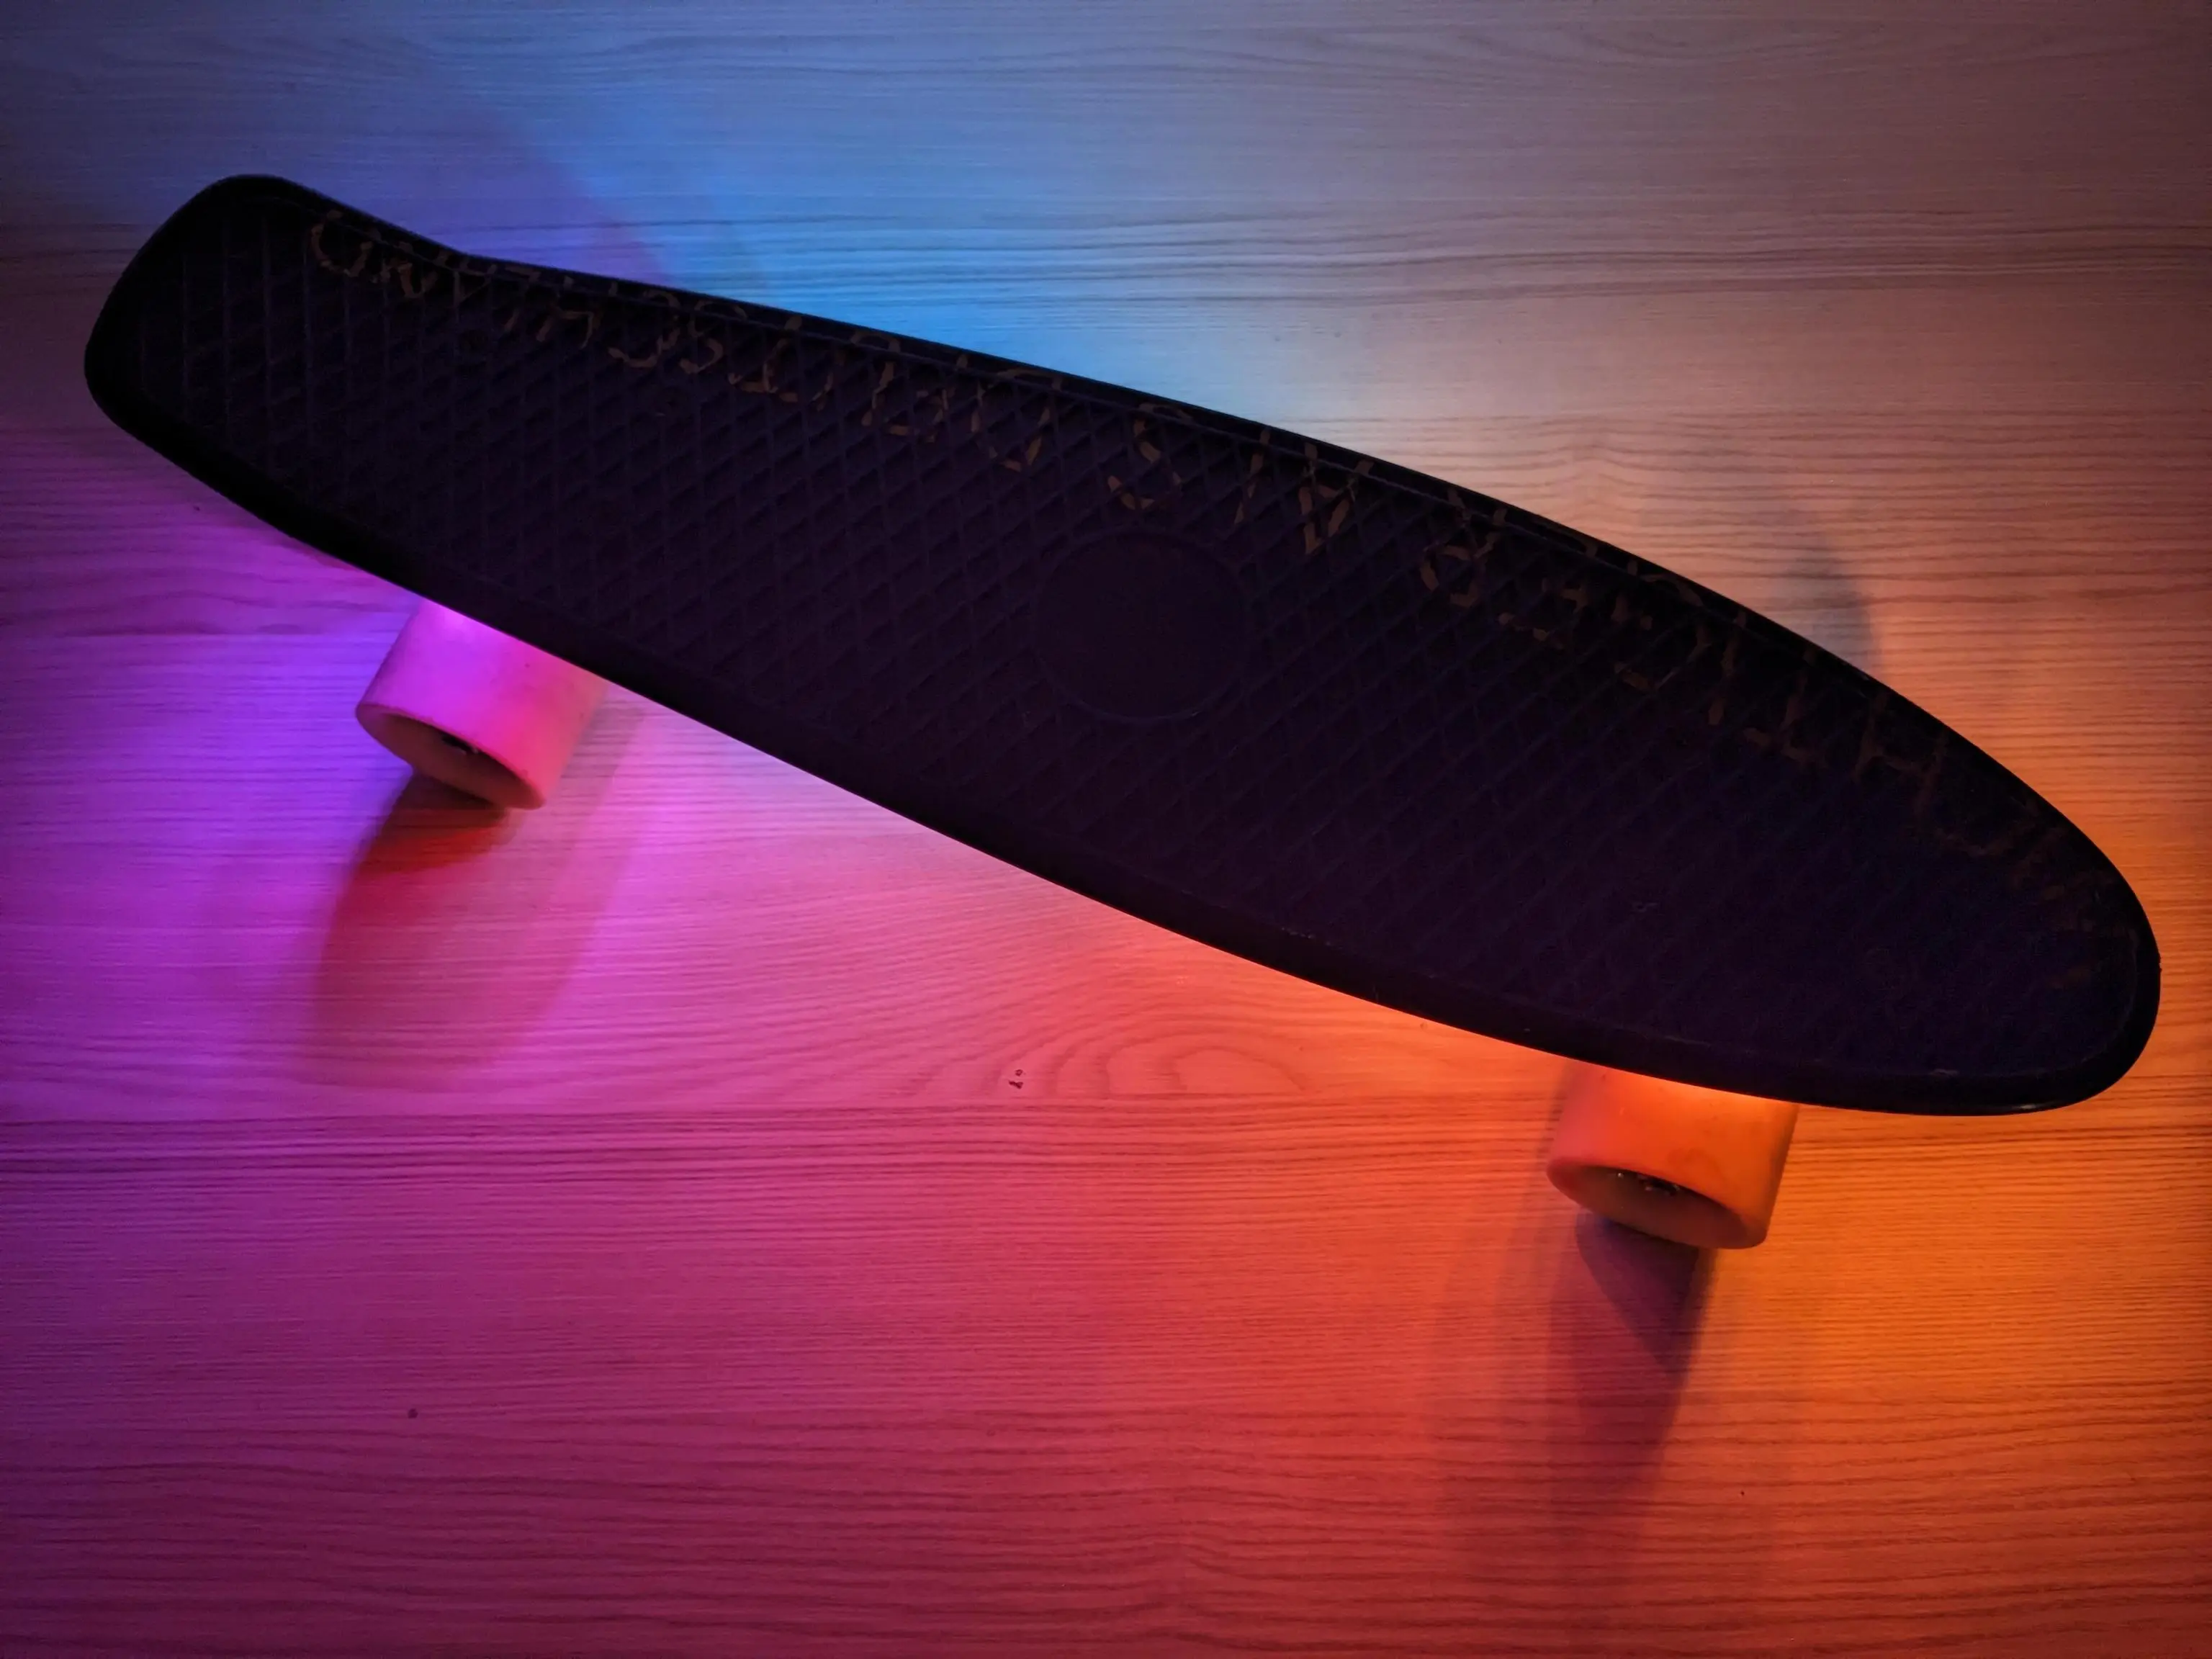 small pennyboard on wooden surface, underside is illuminated by rainbow LED light.